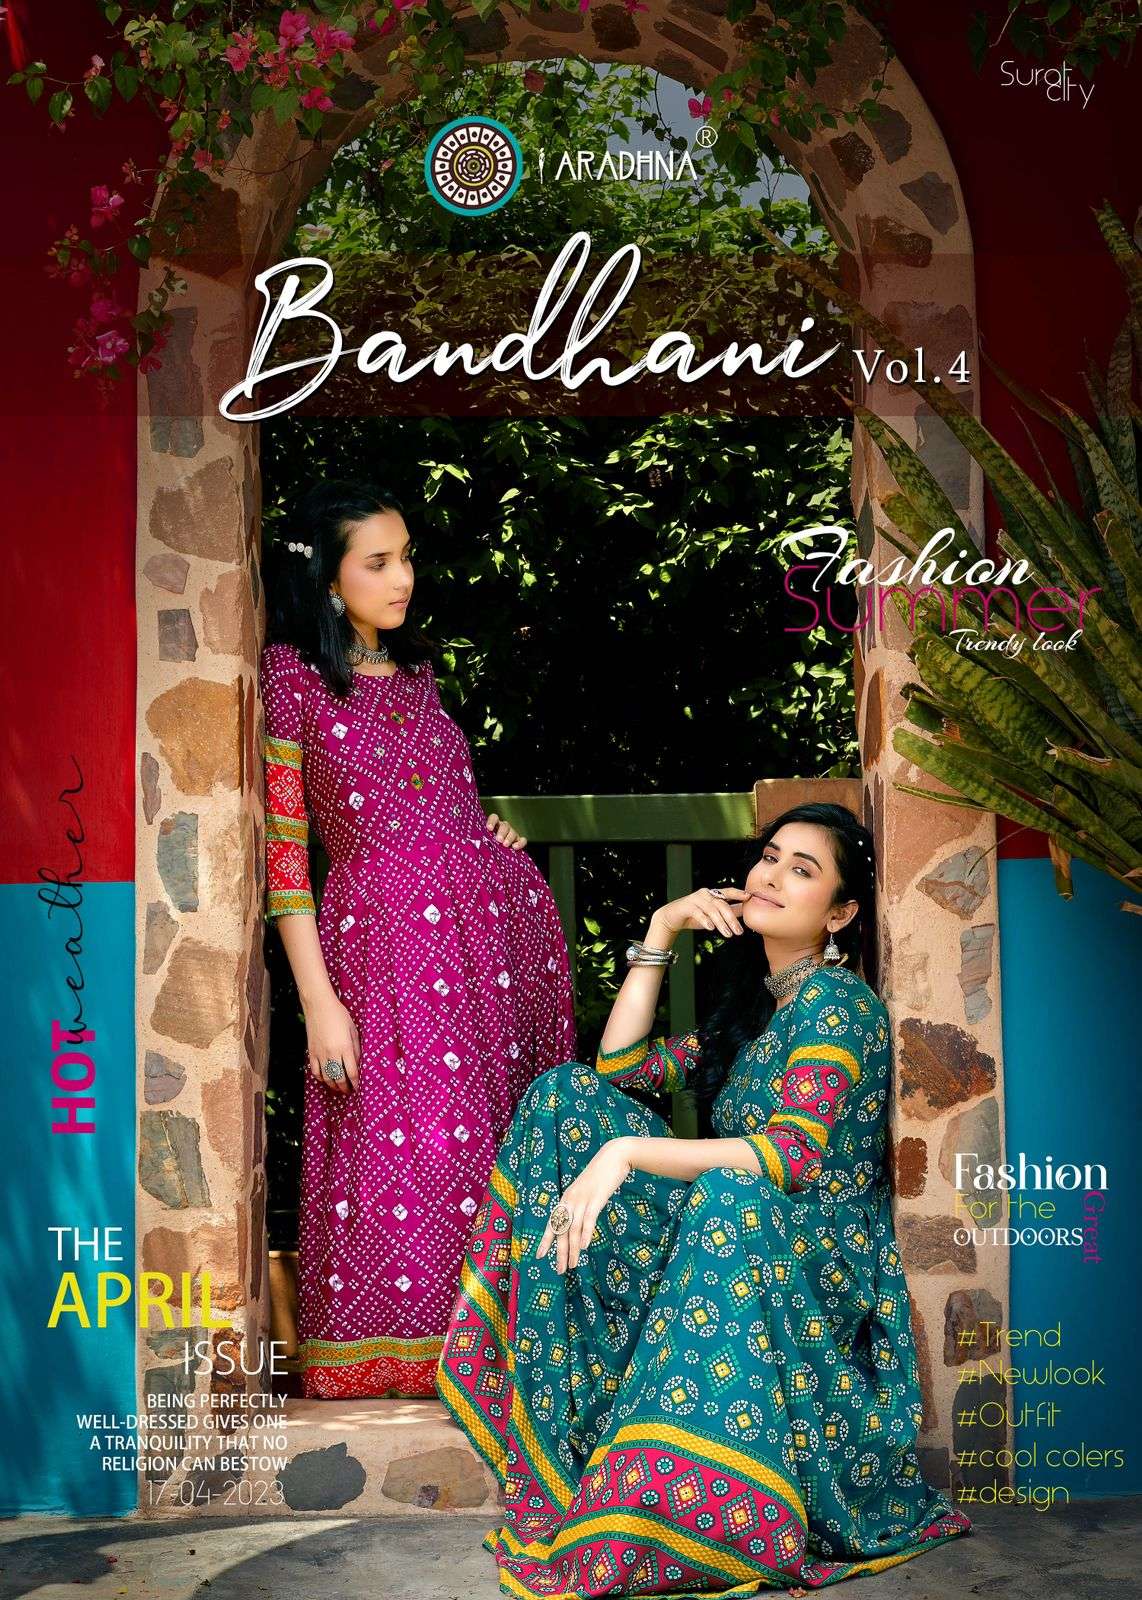 aradhna bandhani vol-4 4001-4012 series fancy designer long kurtis catalogue online dealer surat 